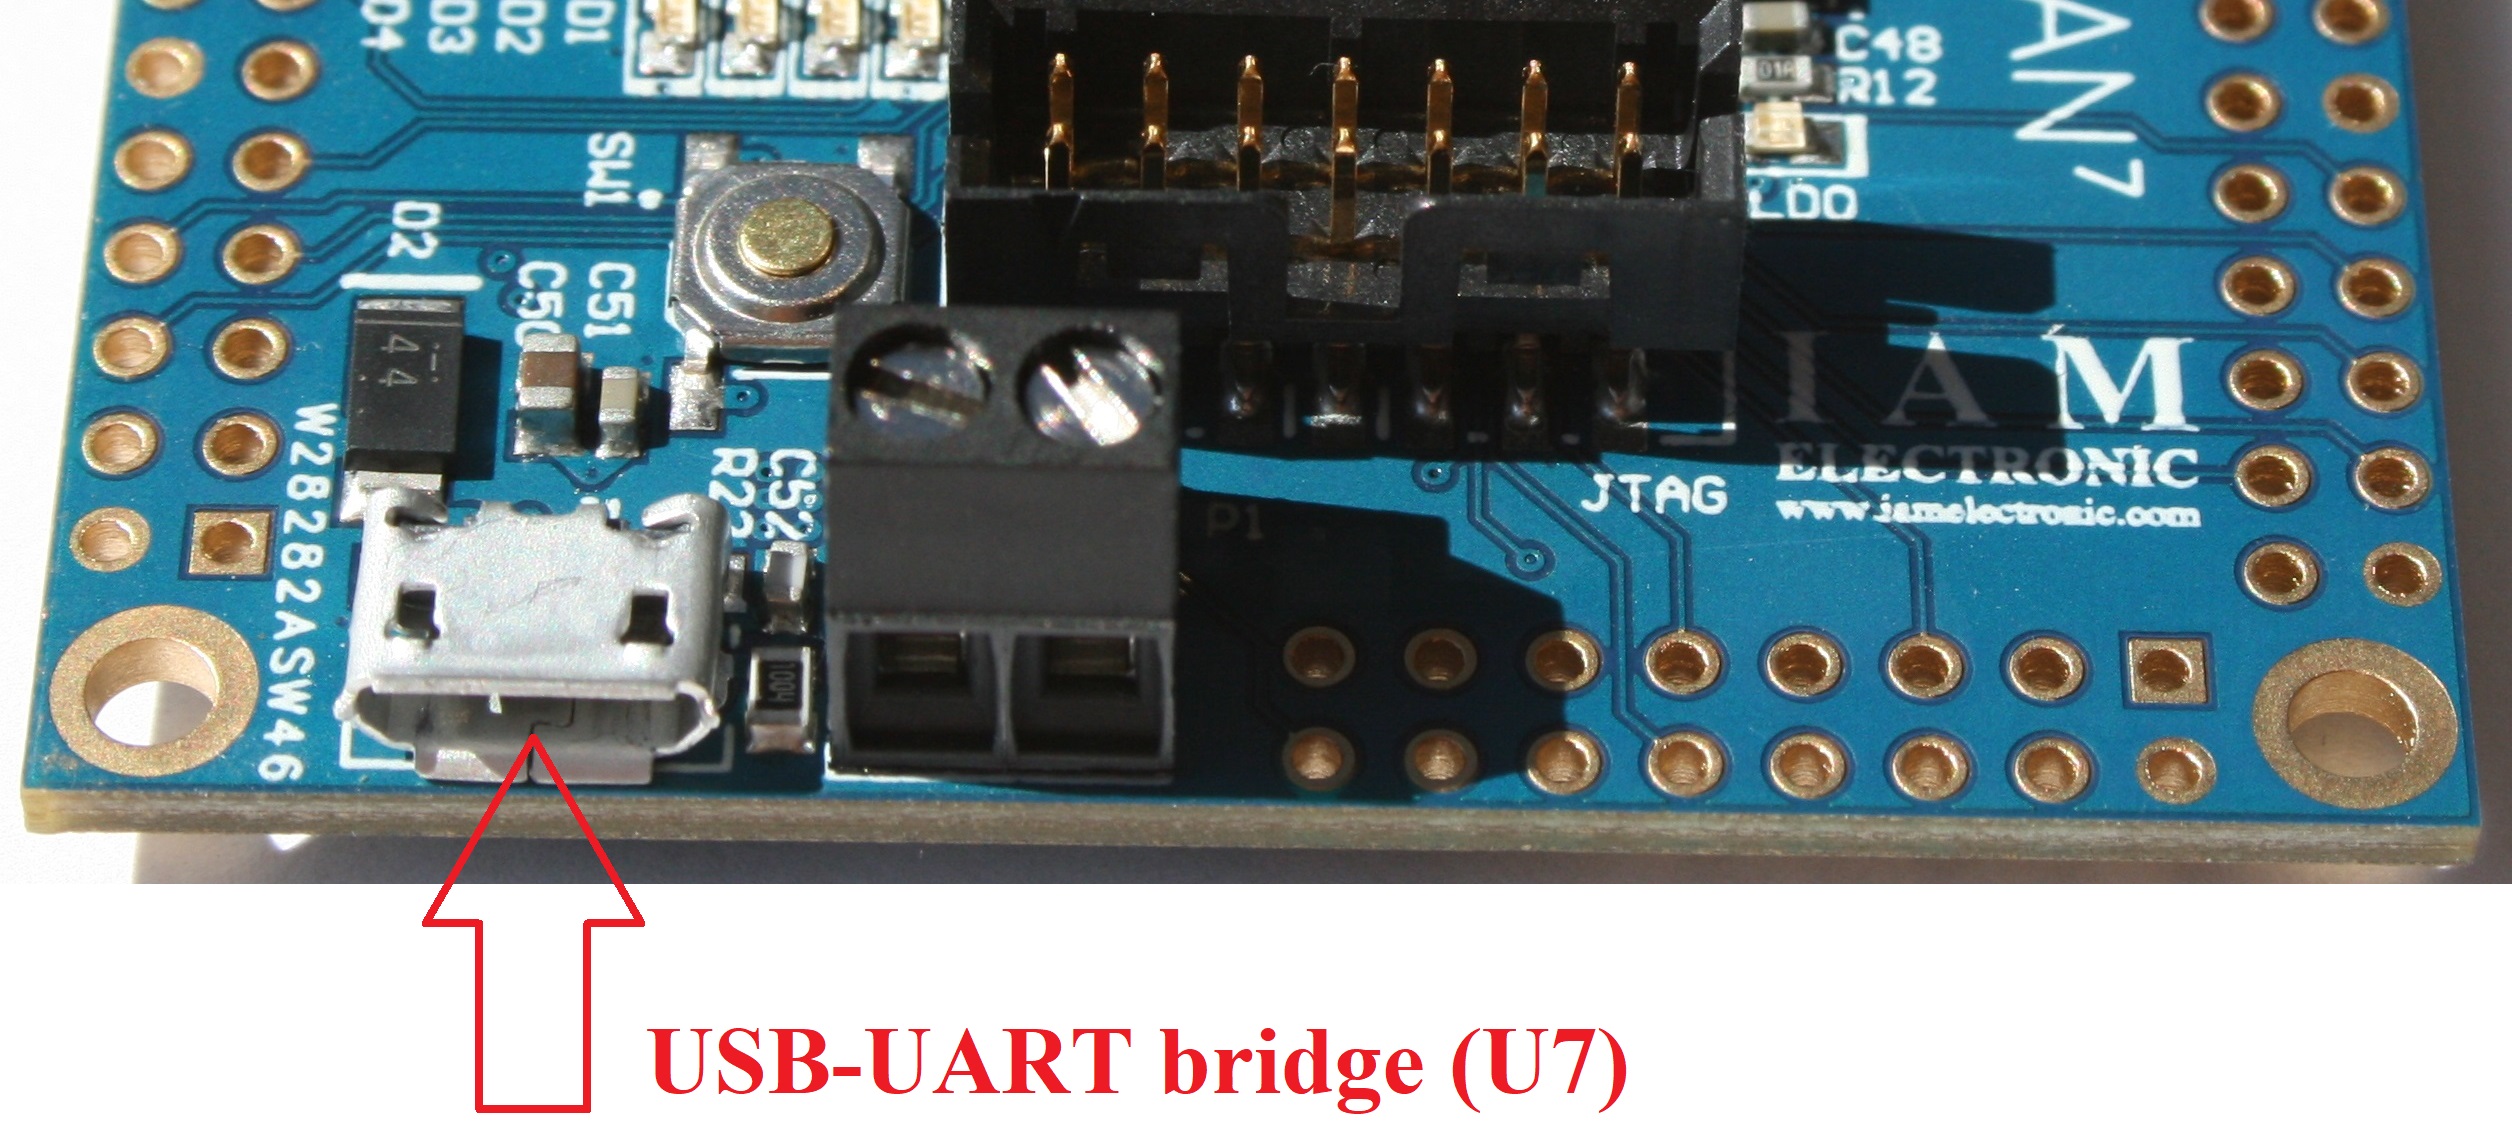 Spartan-7 FPGA module, USB-UART bridge